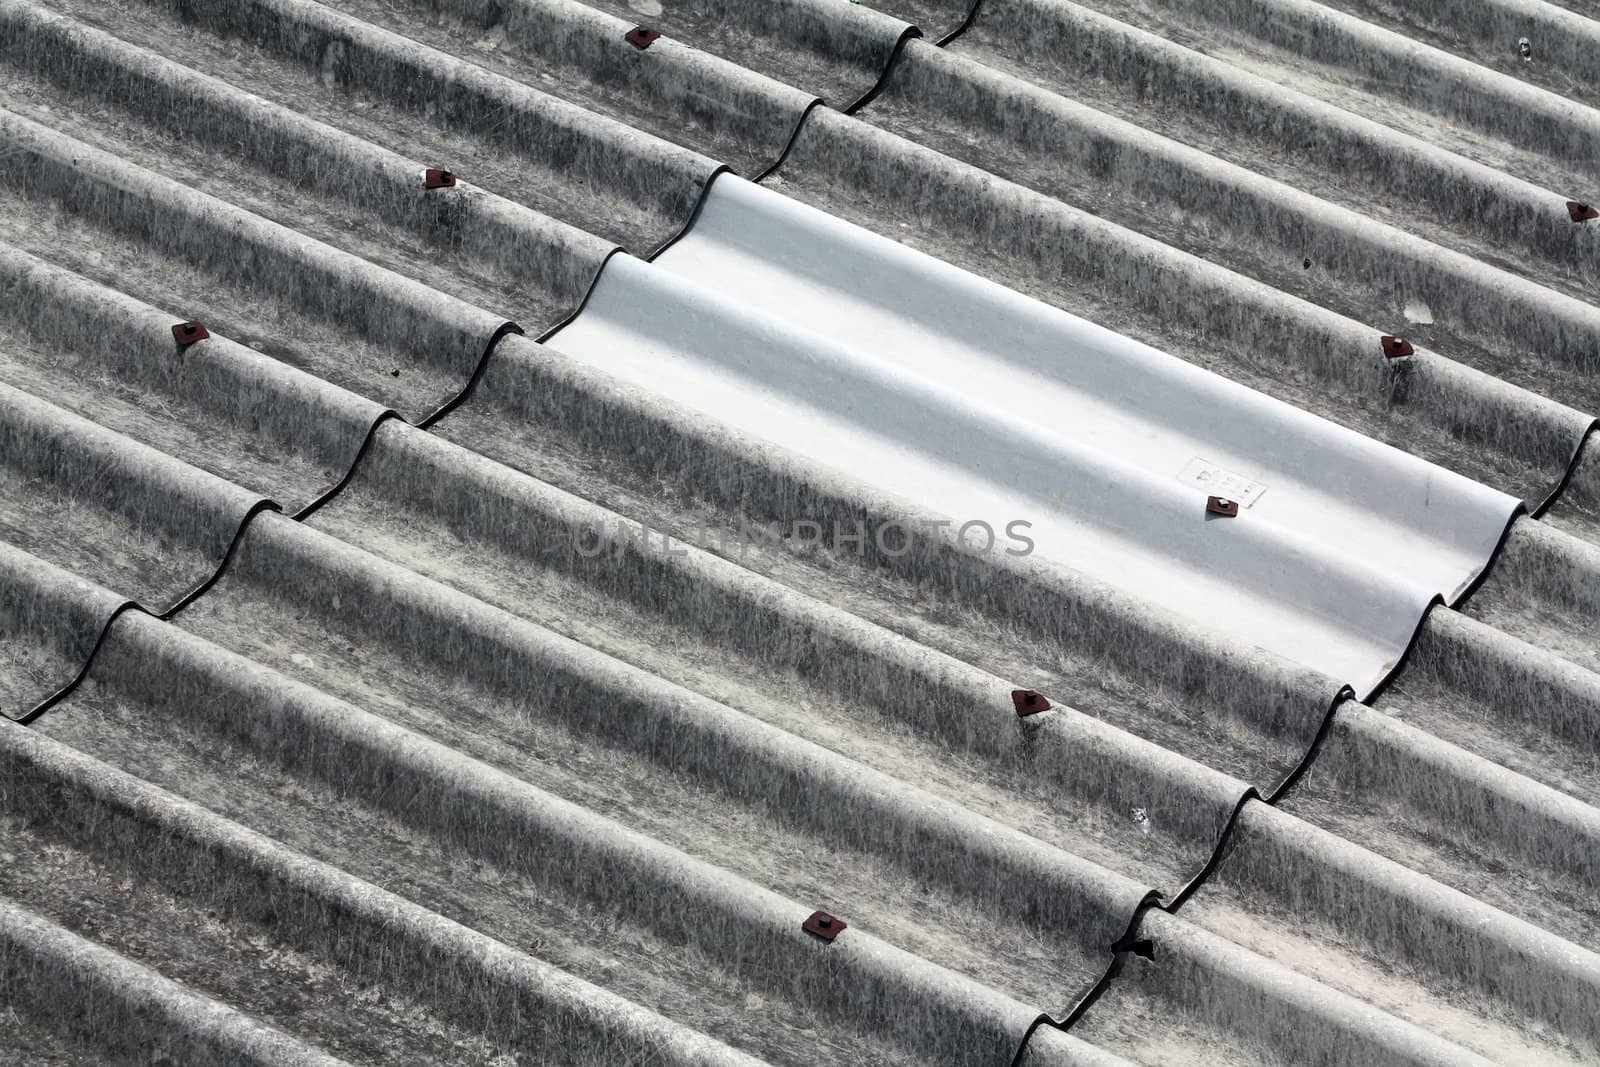 Roof Tile Pattern